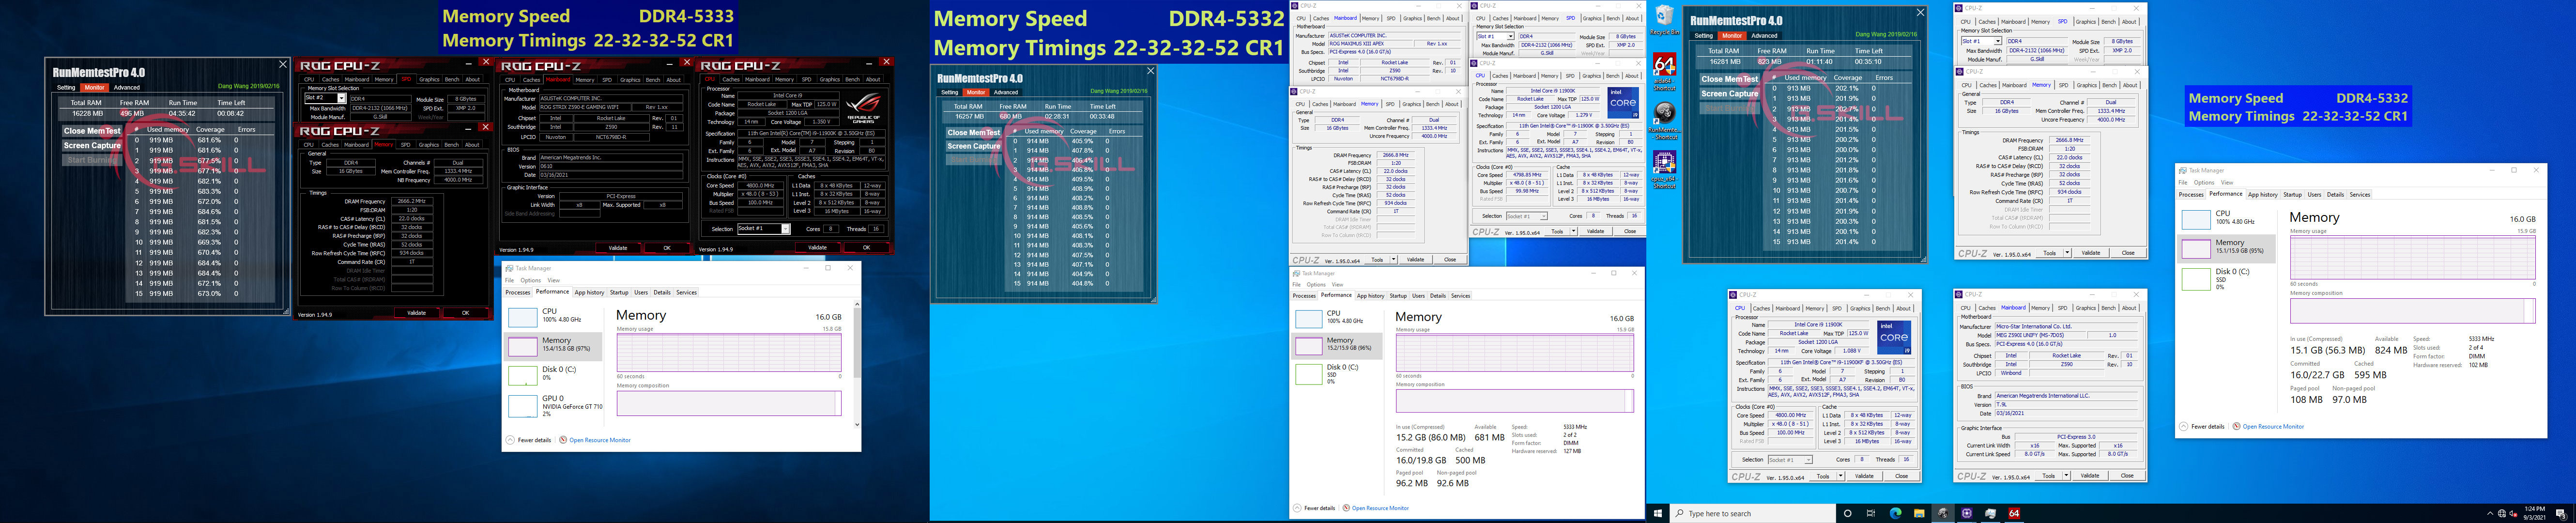 02 ddr4 5333 c22 8gbx2 G.SKILL ประกาศเปิดตัวแรม G.SKILL Trident Z Royal , Trident Z RGB และ Ripjaws V ซีรี่ย์พร้อมบัสแรมสูงสุดถึง DDR4 5333 ใช้งานกับเมนบอร์ด Intel Z590 โดยเฉพาะ!!!